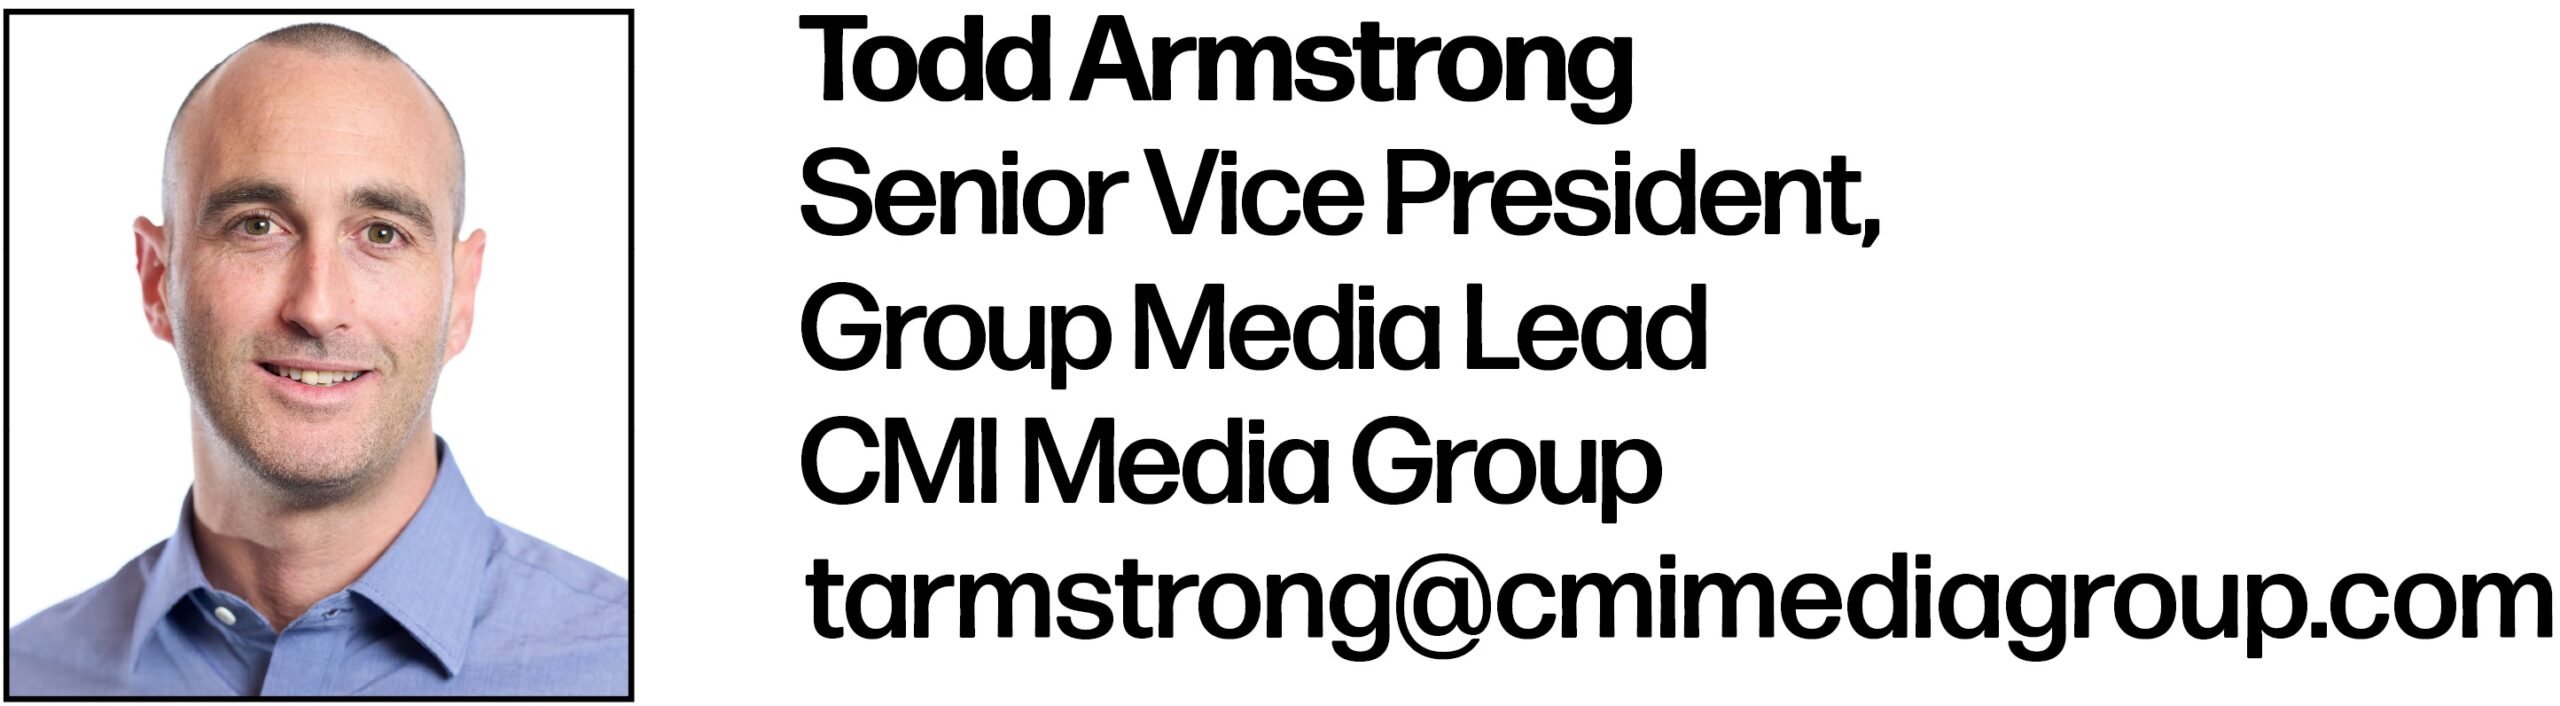 Todd Armstrong Senior Vice President, Group Media Lead CMI Media Group tarmstrong@cmimediagroup.com